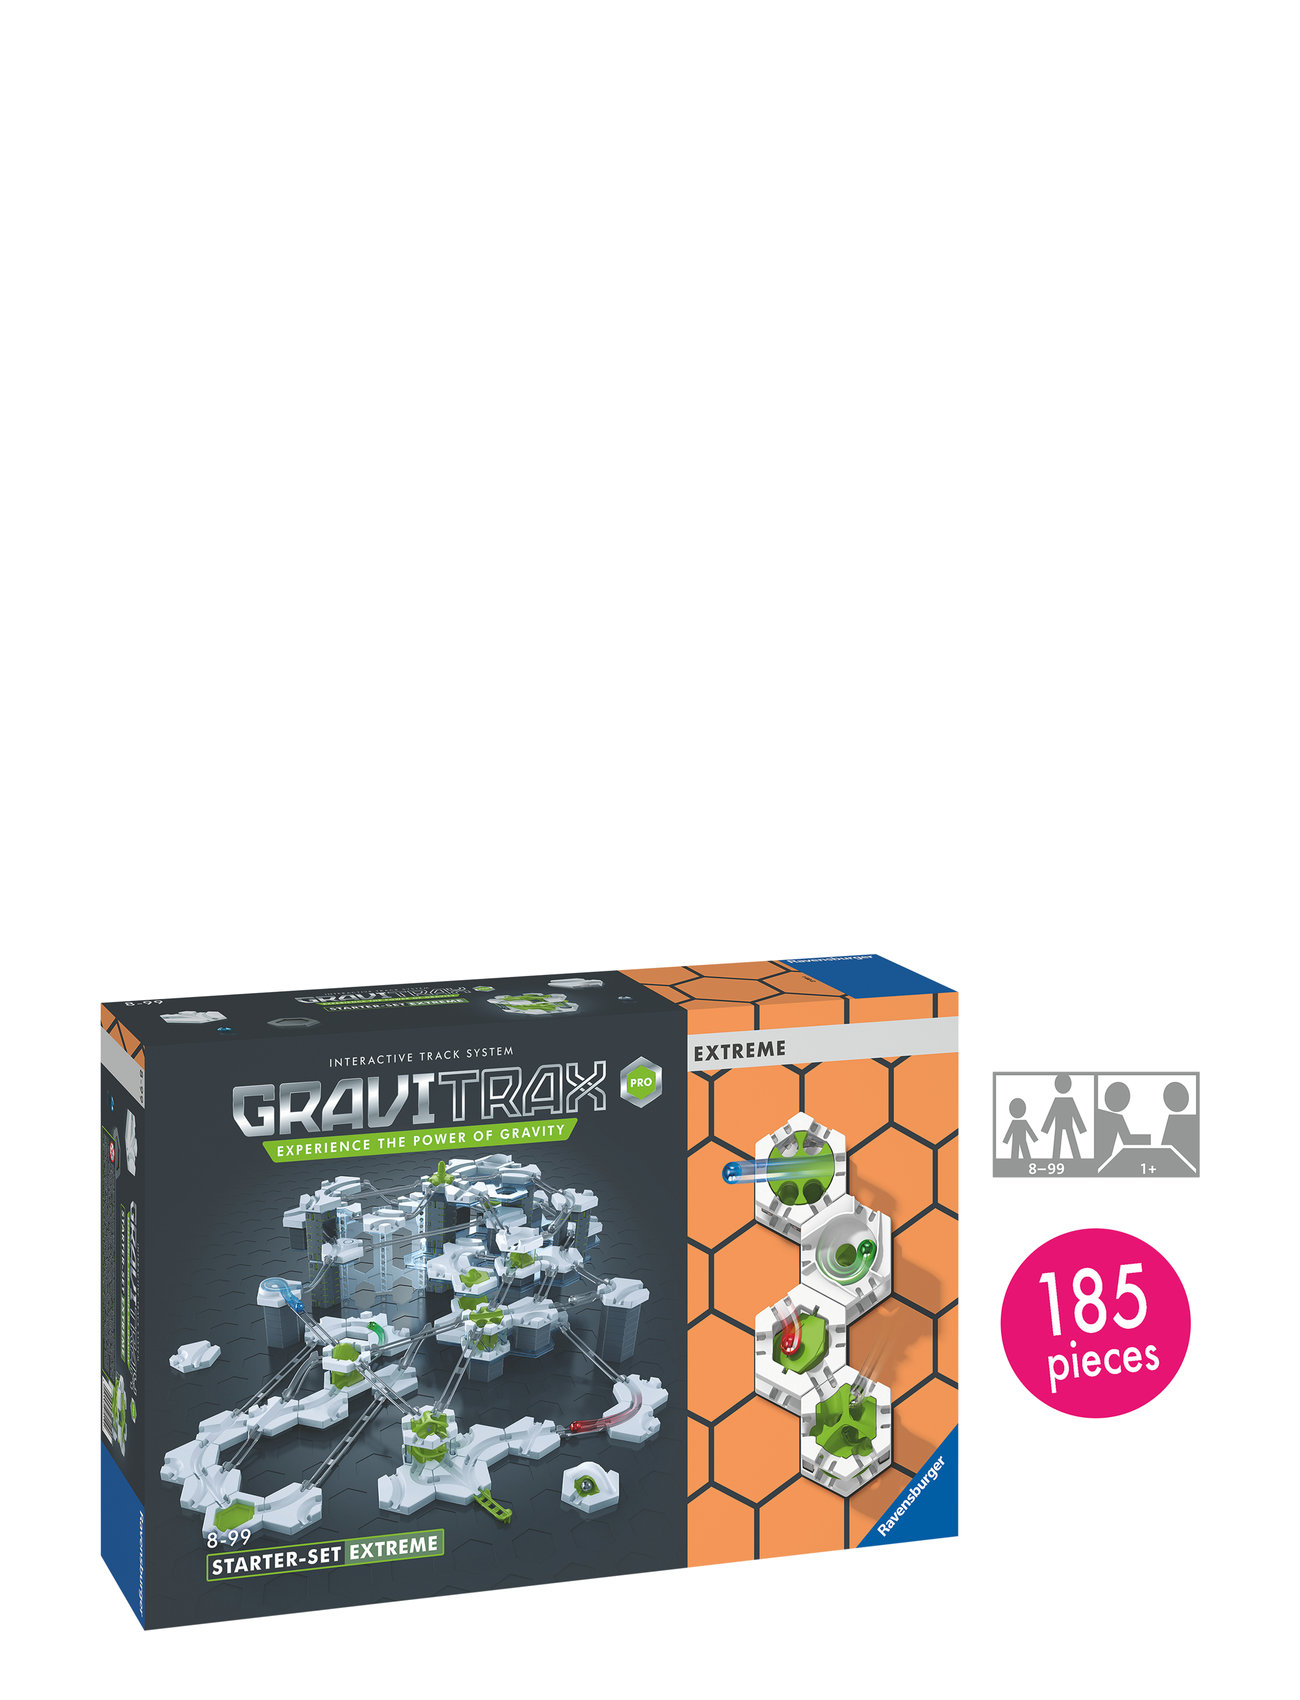 Gravitrax Pro Starter Set Extreme Toys Building Sets & Blocks Ball Tracks Multi/patterned Ravensburger